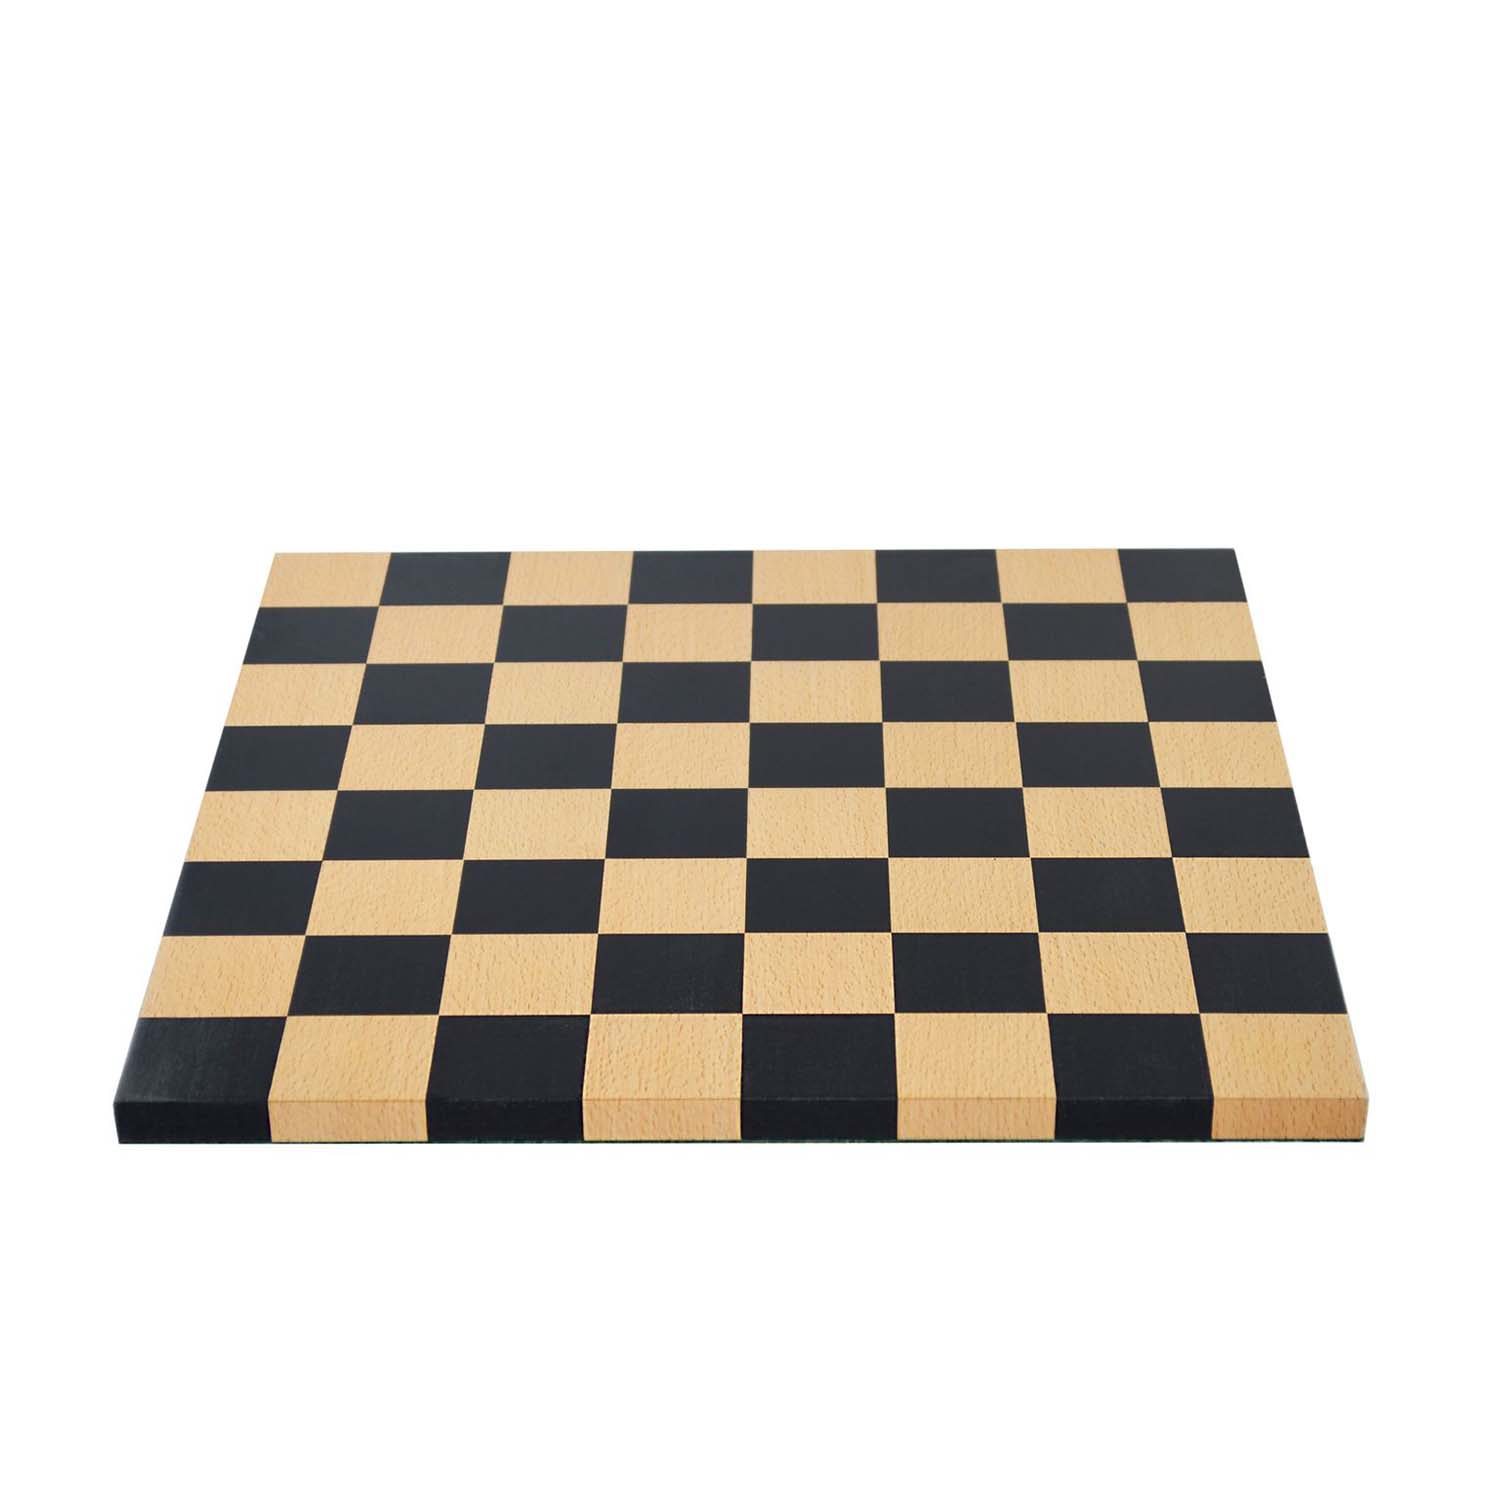 Imagen de Tablero de ajedrez de Man Ray 